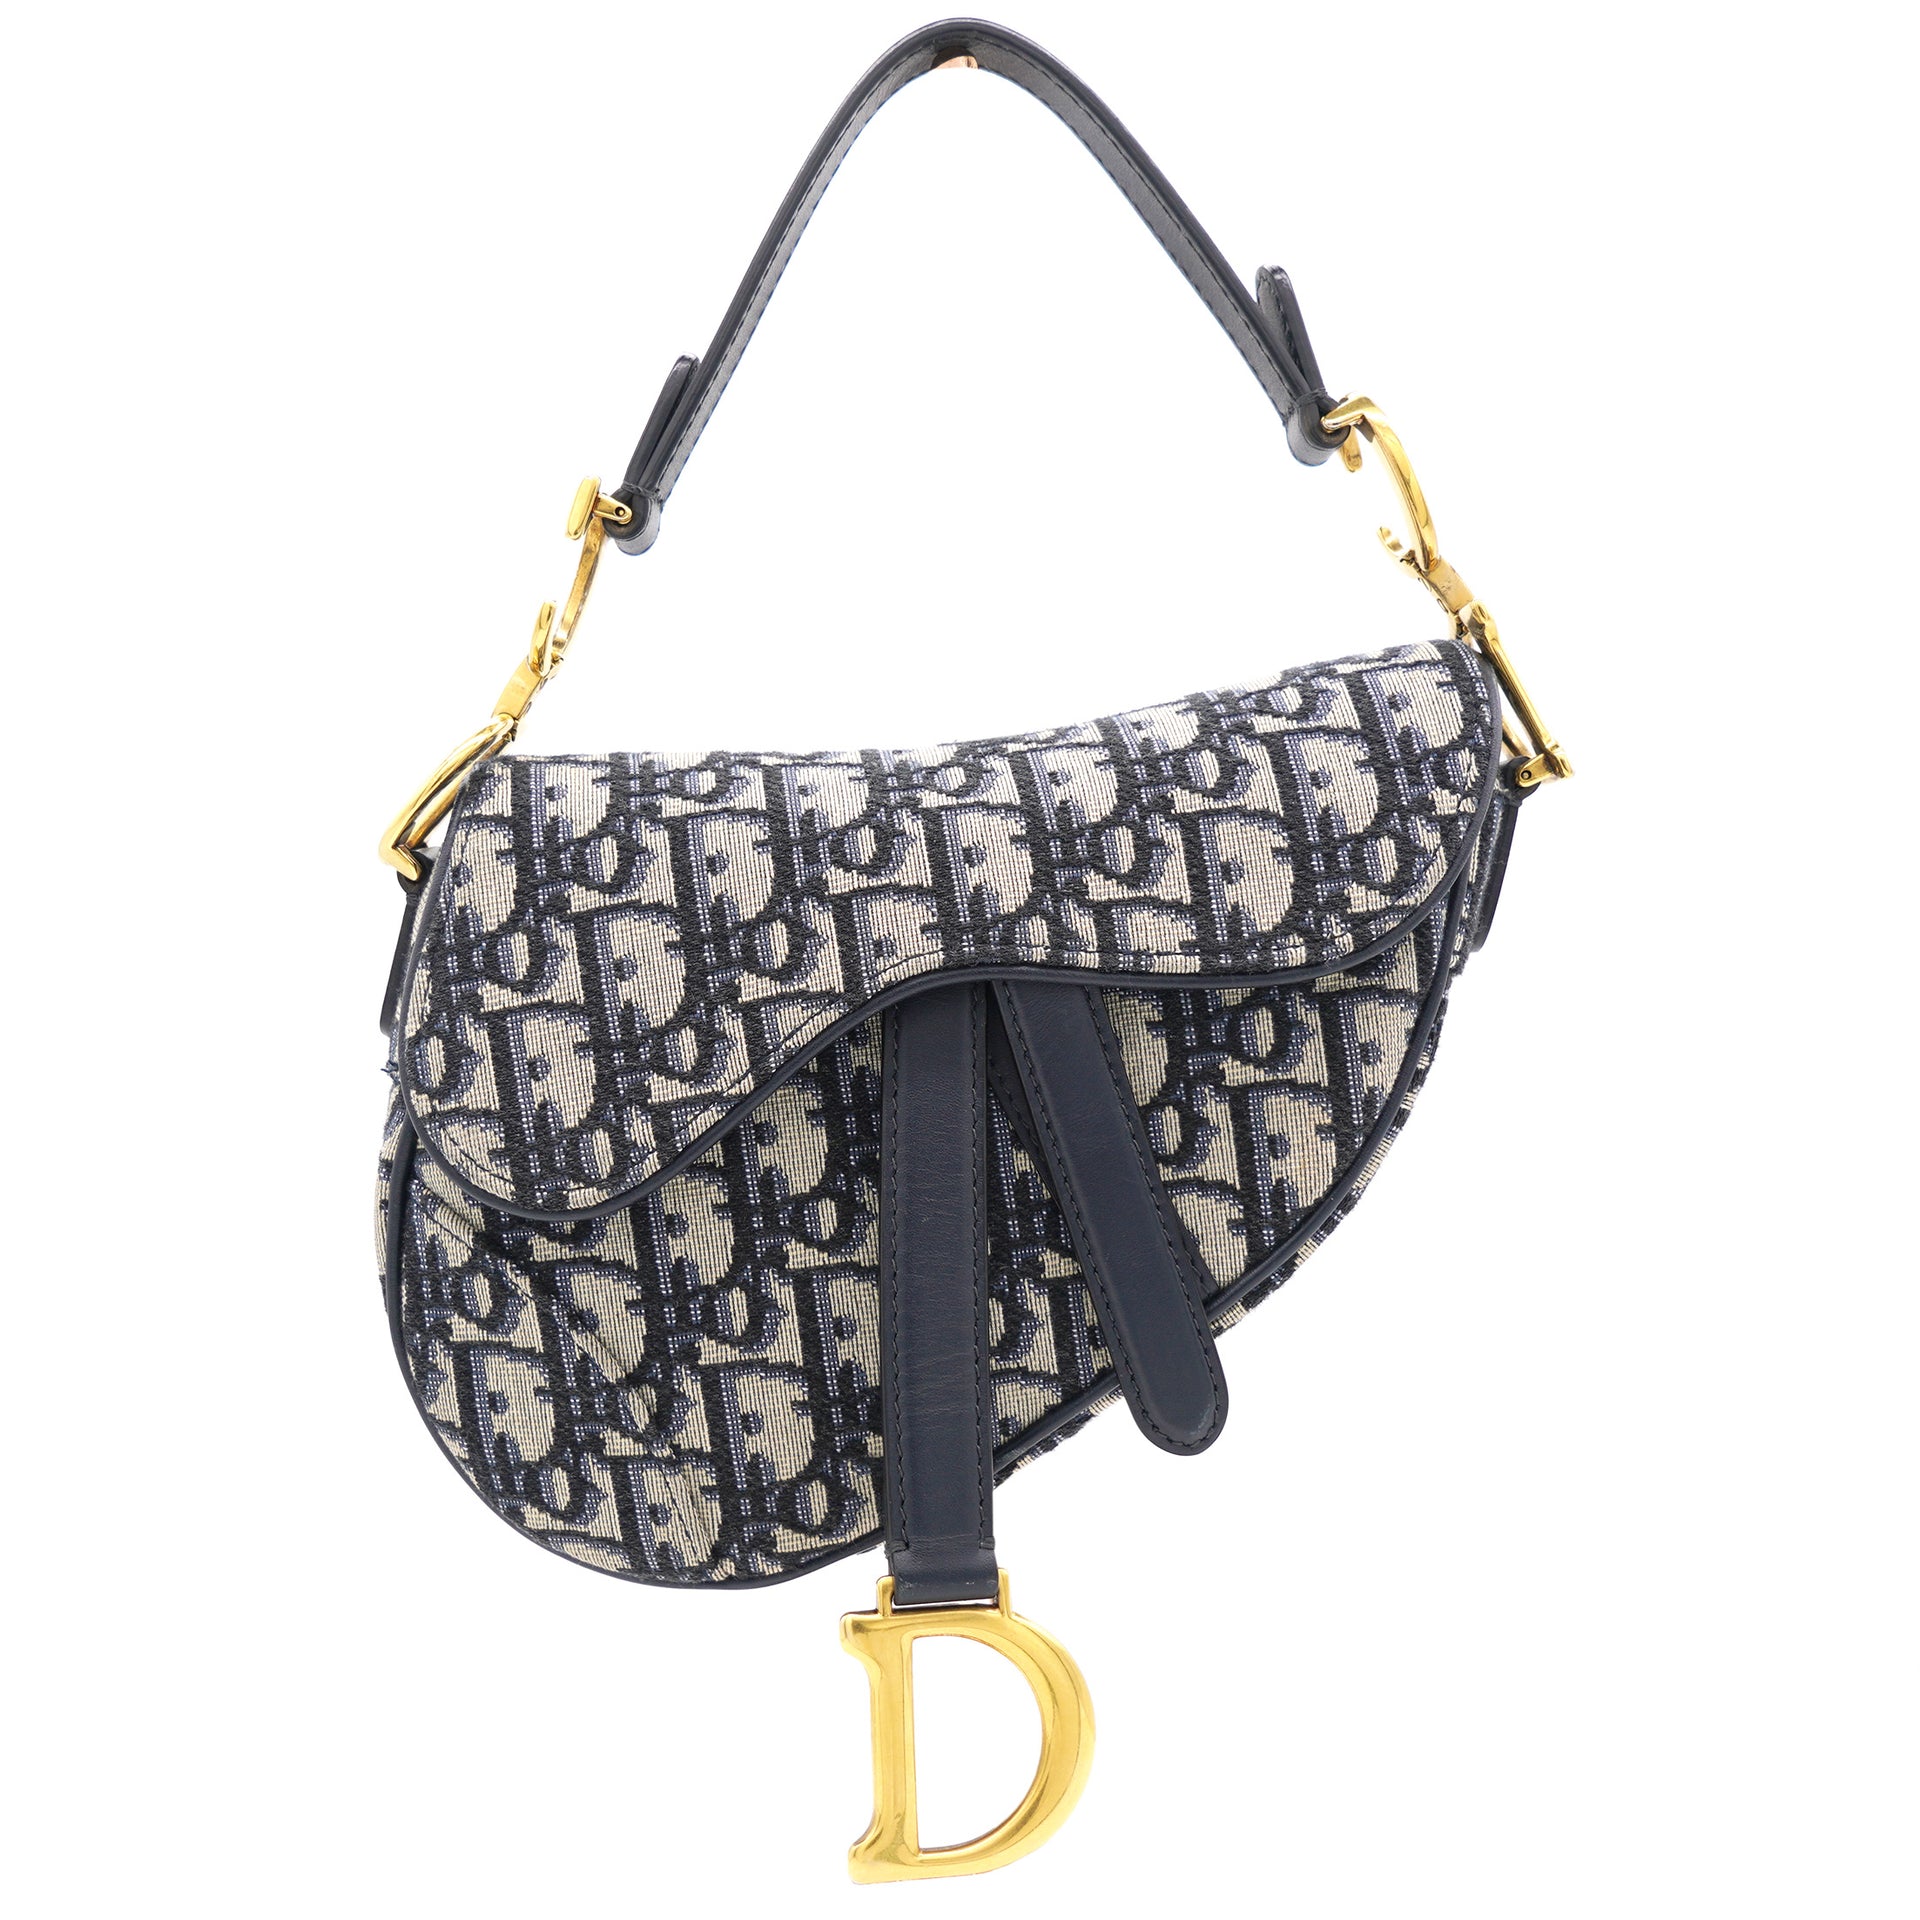 Dior Saddle Bag Size Comparison  Dior saddle bag Bags Black saddle bag